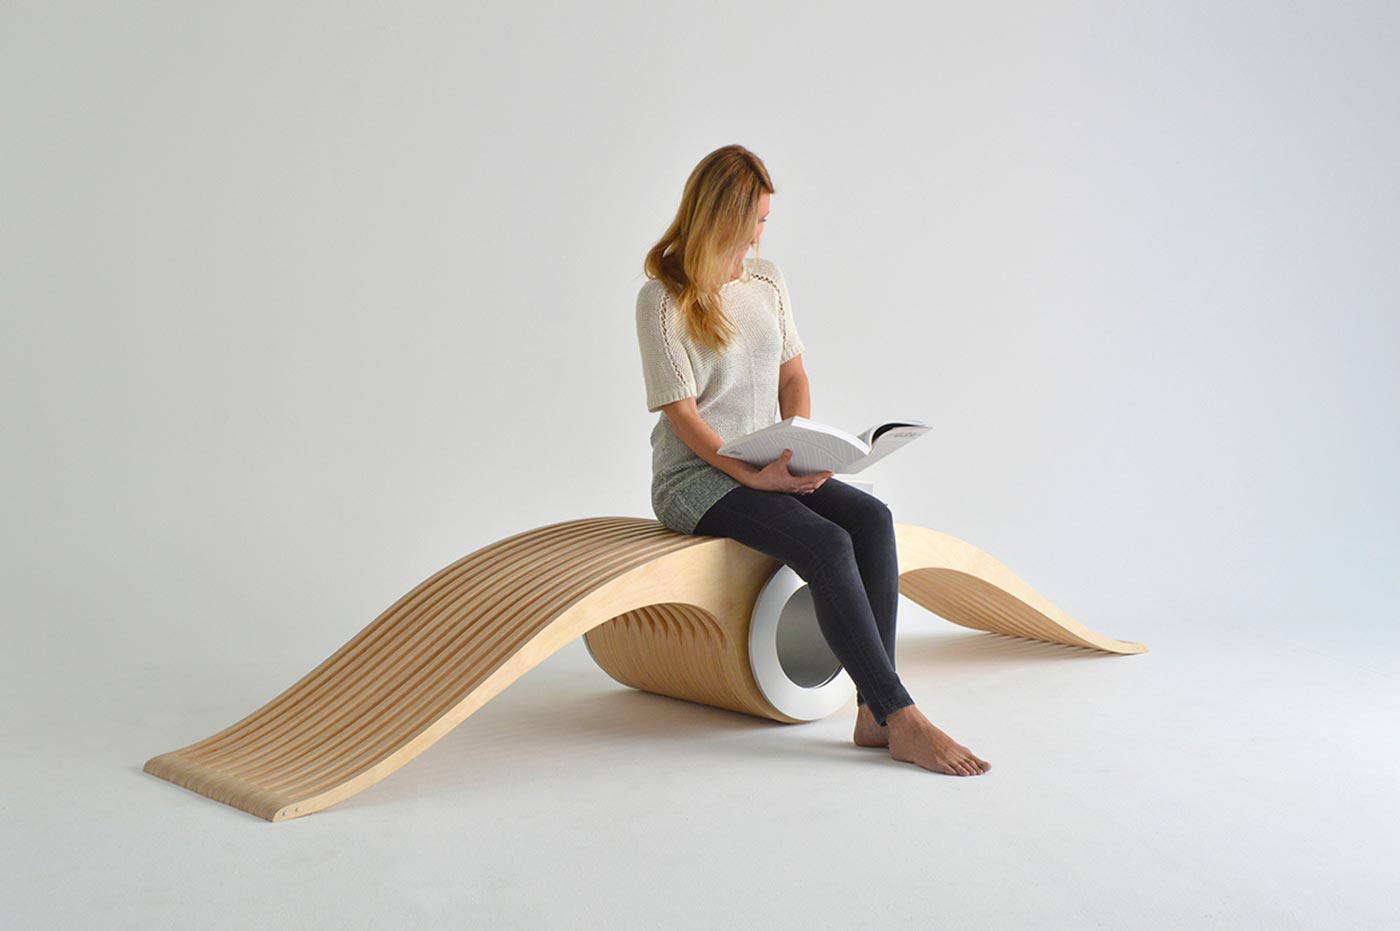 exocet-a-versatile-and-ergonomic-chair-by-designarium-9.jpg